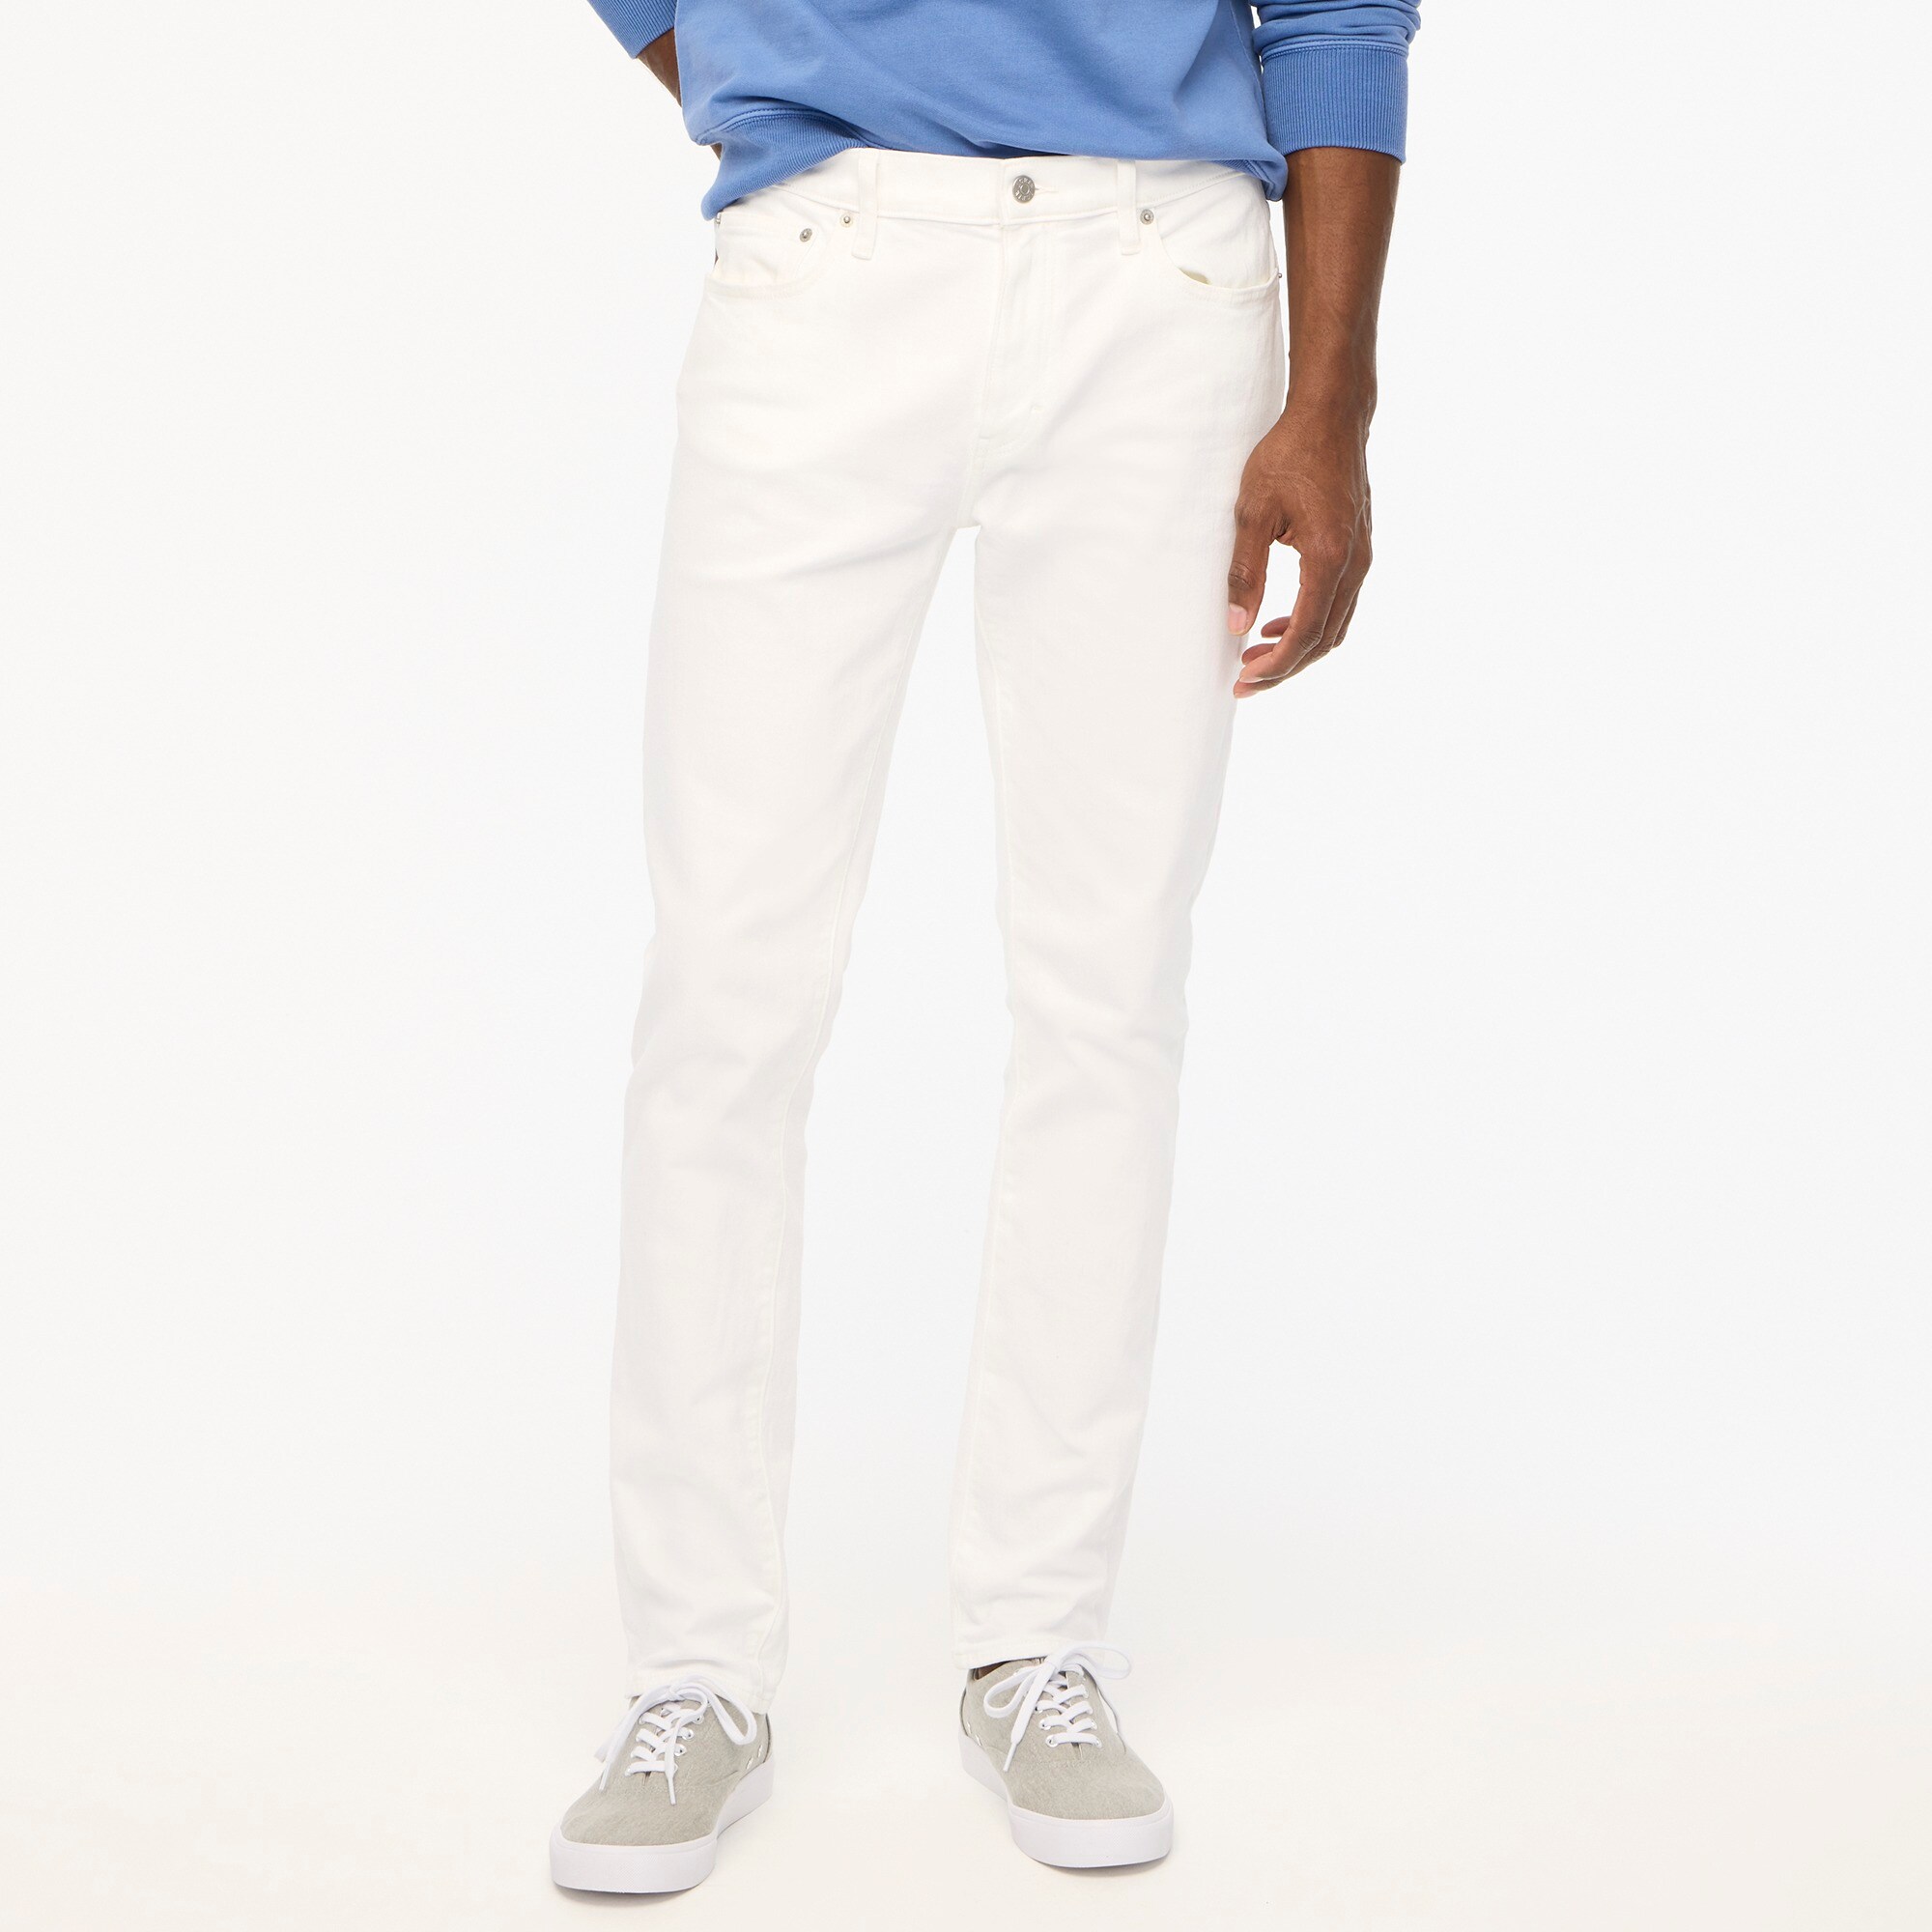  Slim-fit flex jean in white